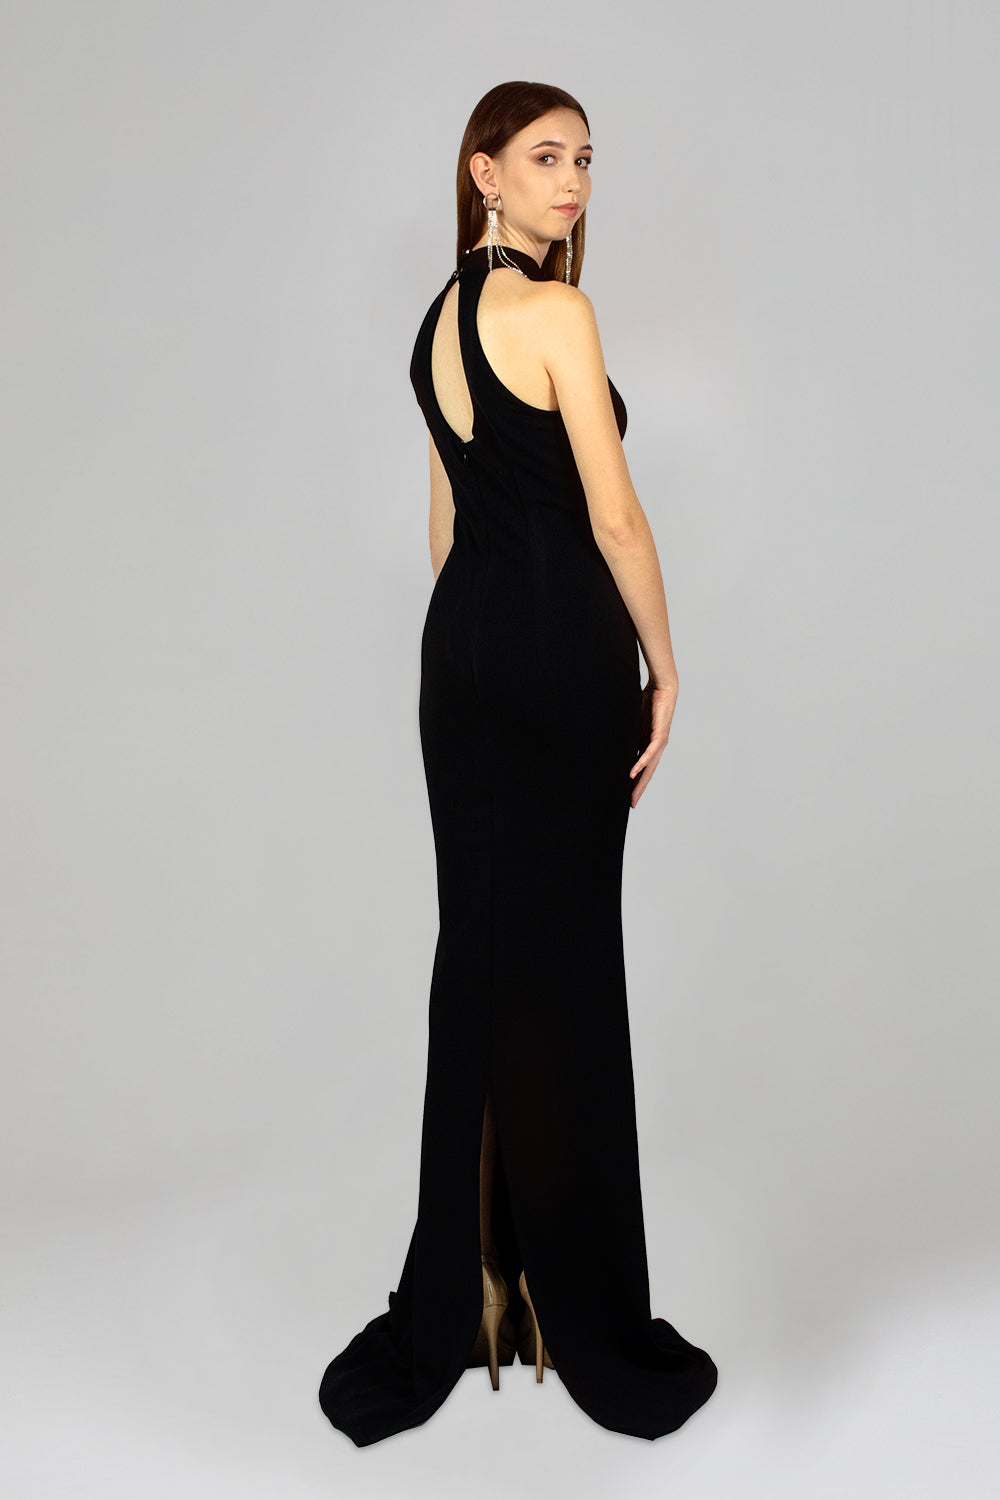 custom made black formal dresses perth australia envious bridal & formal